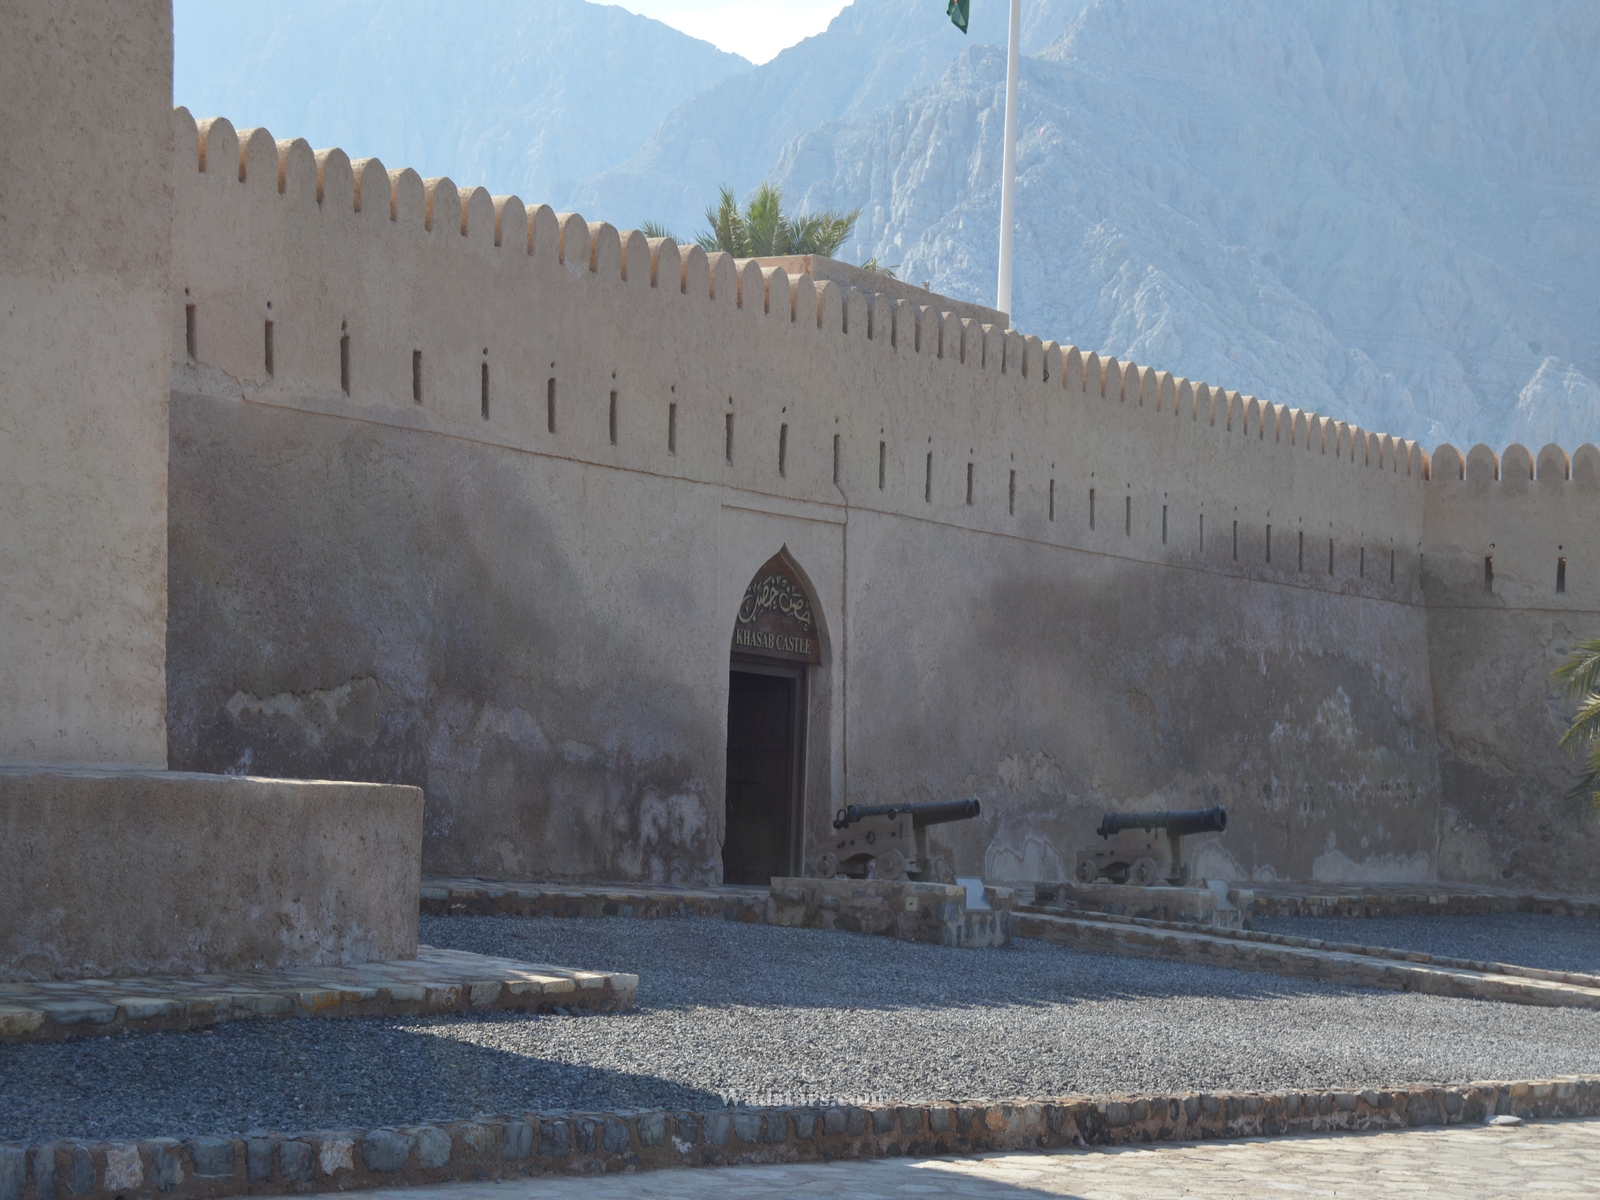 khasab Mussandam Oman hotels and tours 146